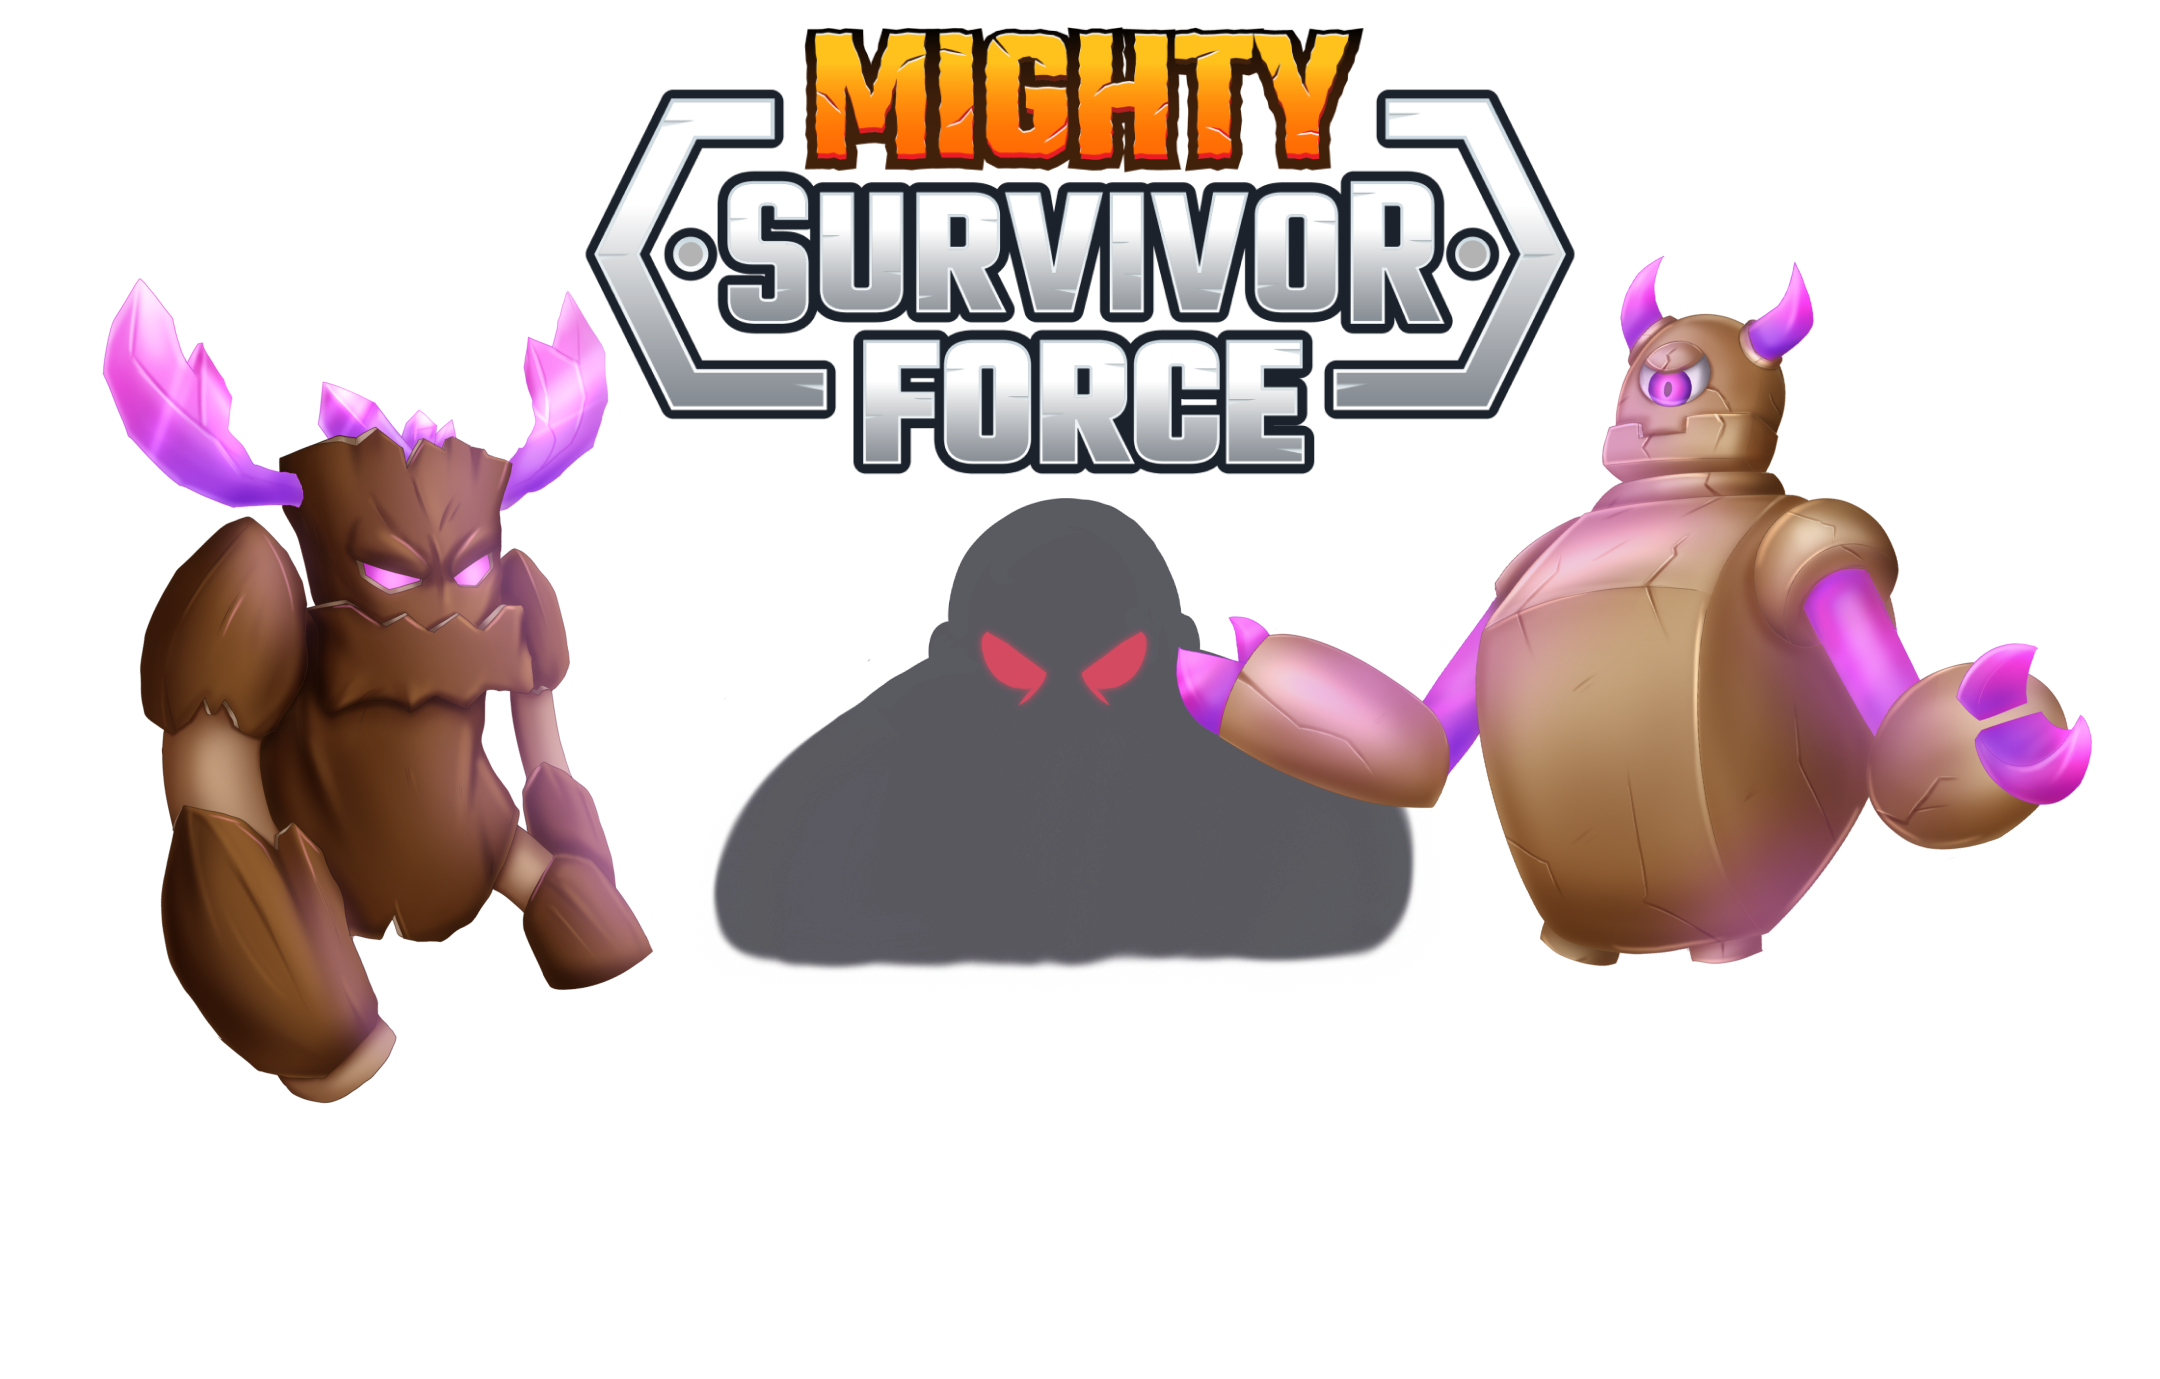 Mighty-Survivor-Force game logo